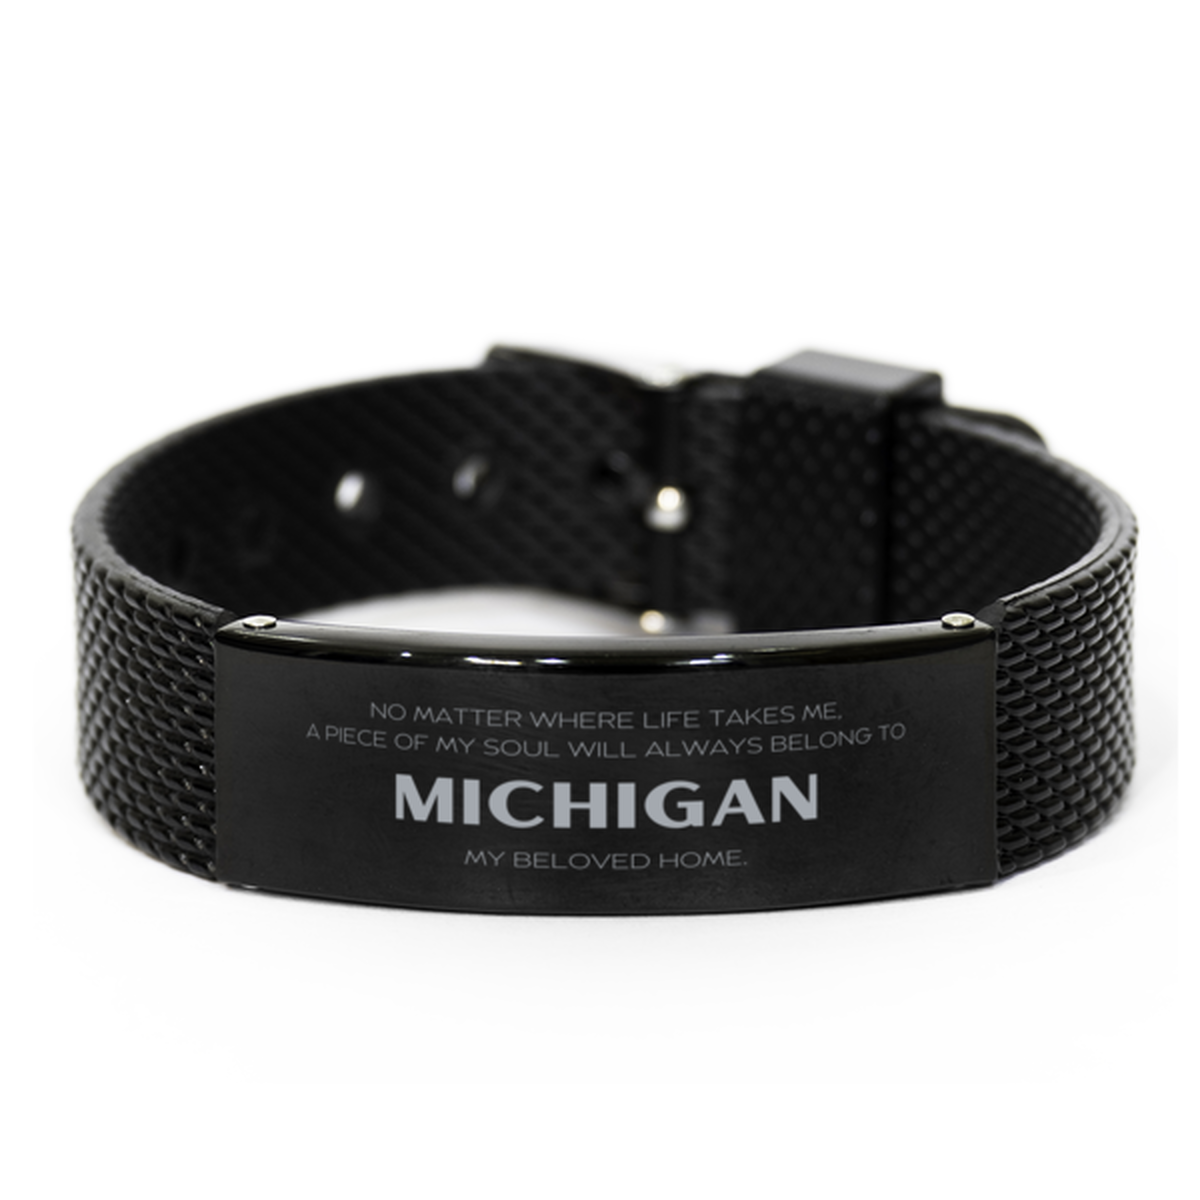 Love Michigan State Gifts, My soul will always belong to Michigan, Proud Black Shark Mesh Bracelet, Birthday Unique Gifts For Michigan Men, Women, Friends